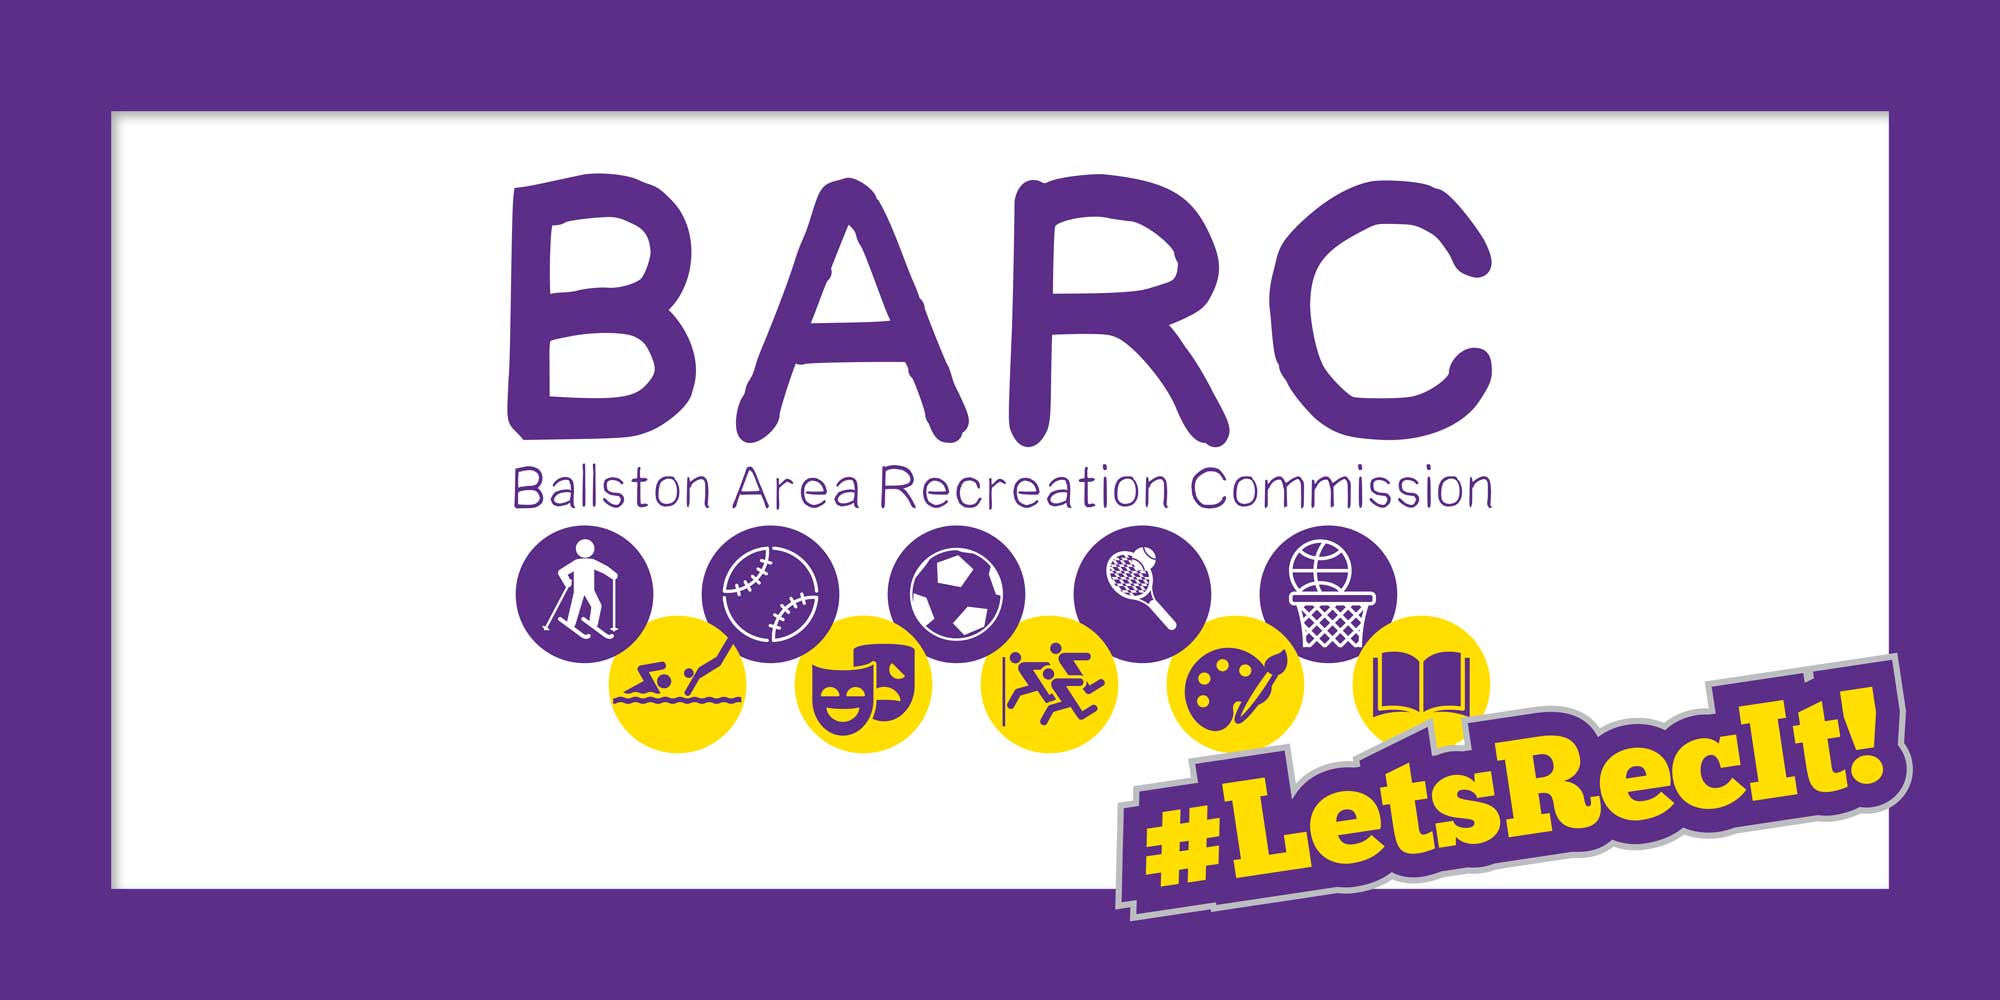 Image showing a BARC banner design.